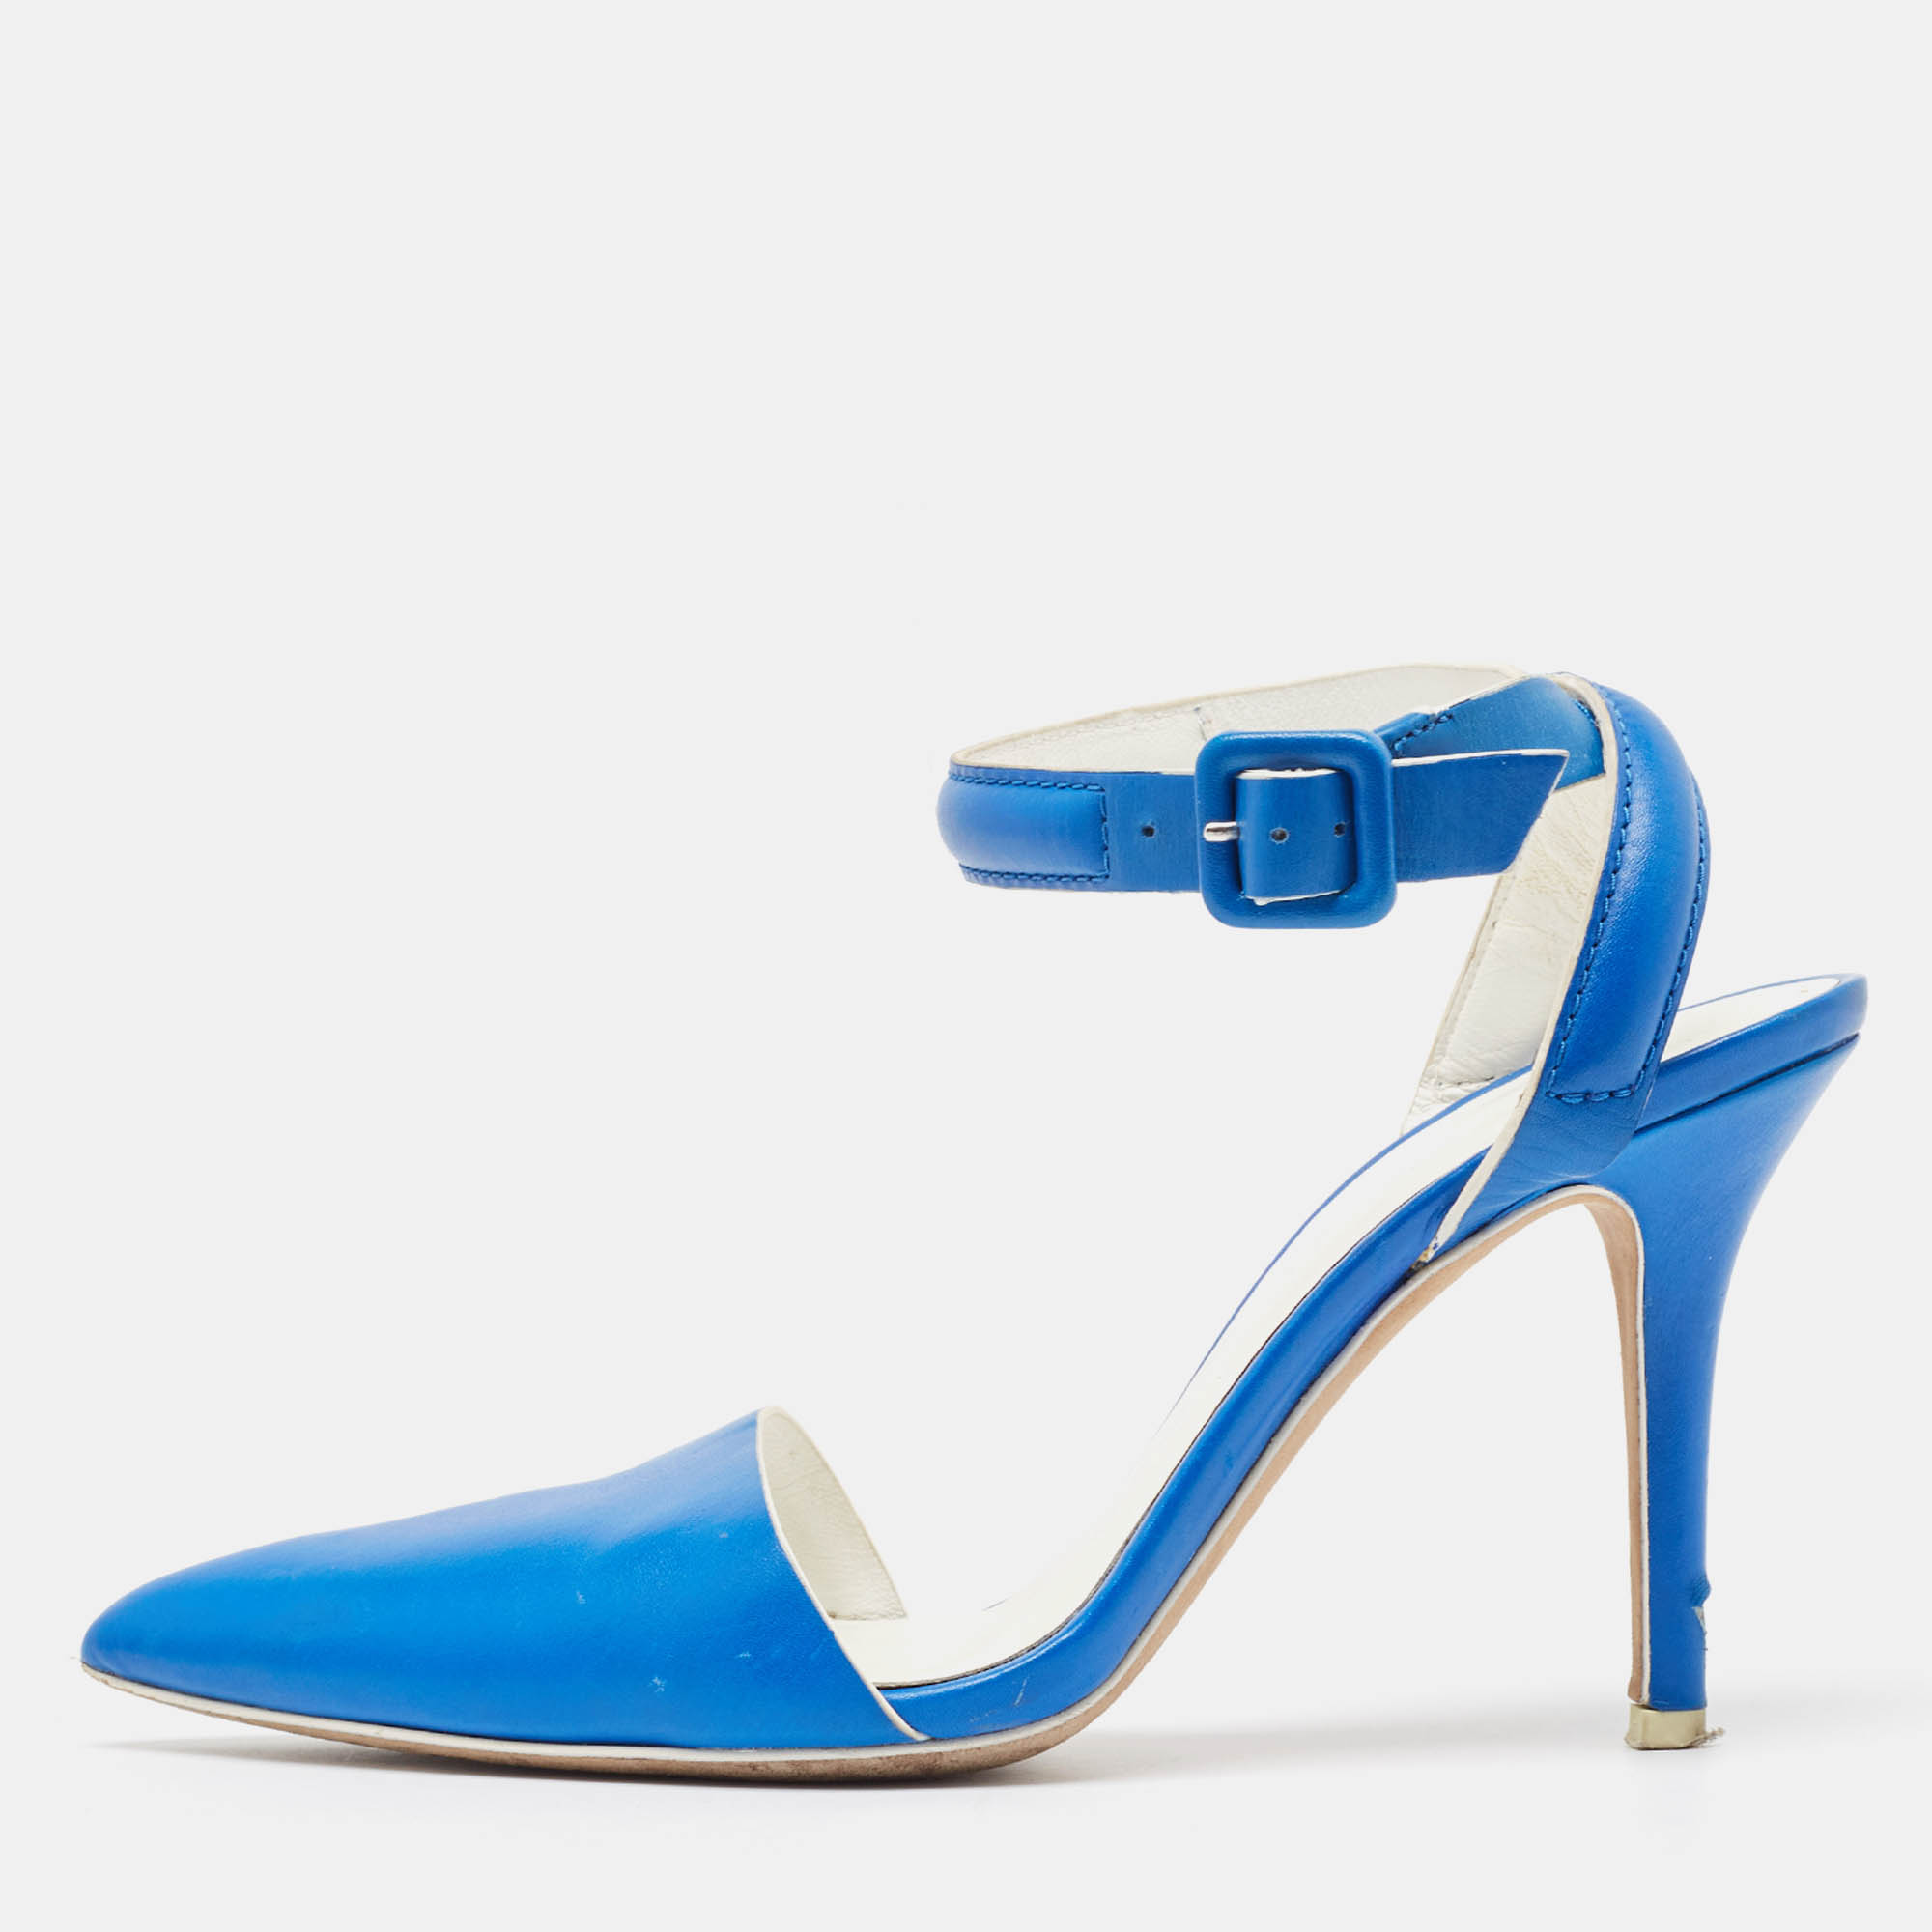 Alexander wang blue leather ankle strap pumps size 36